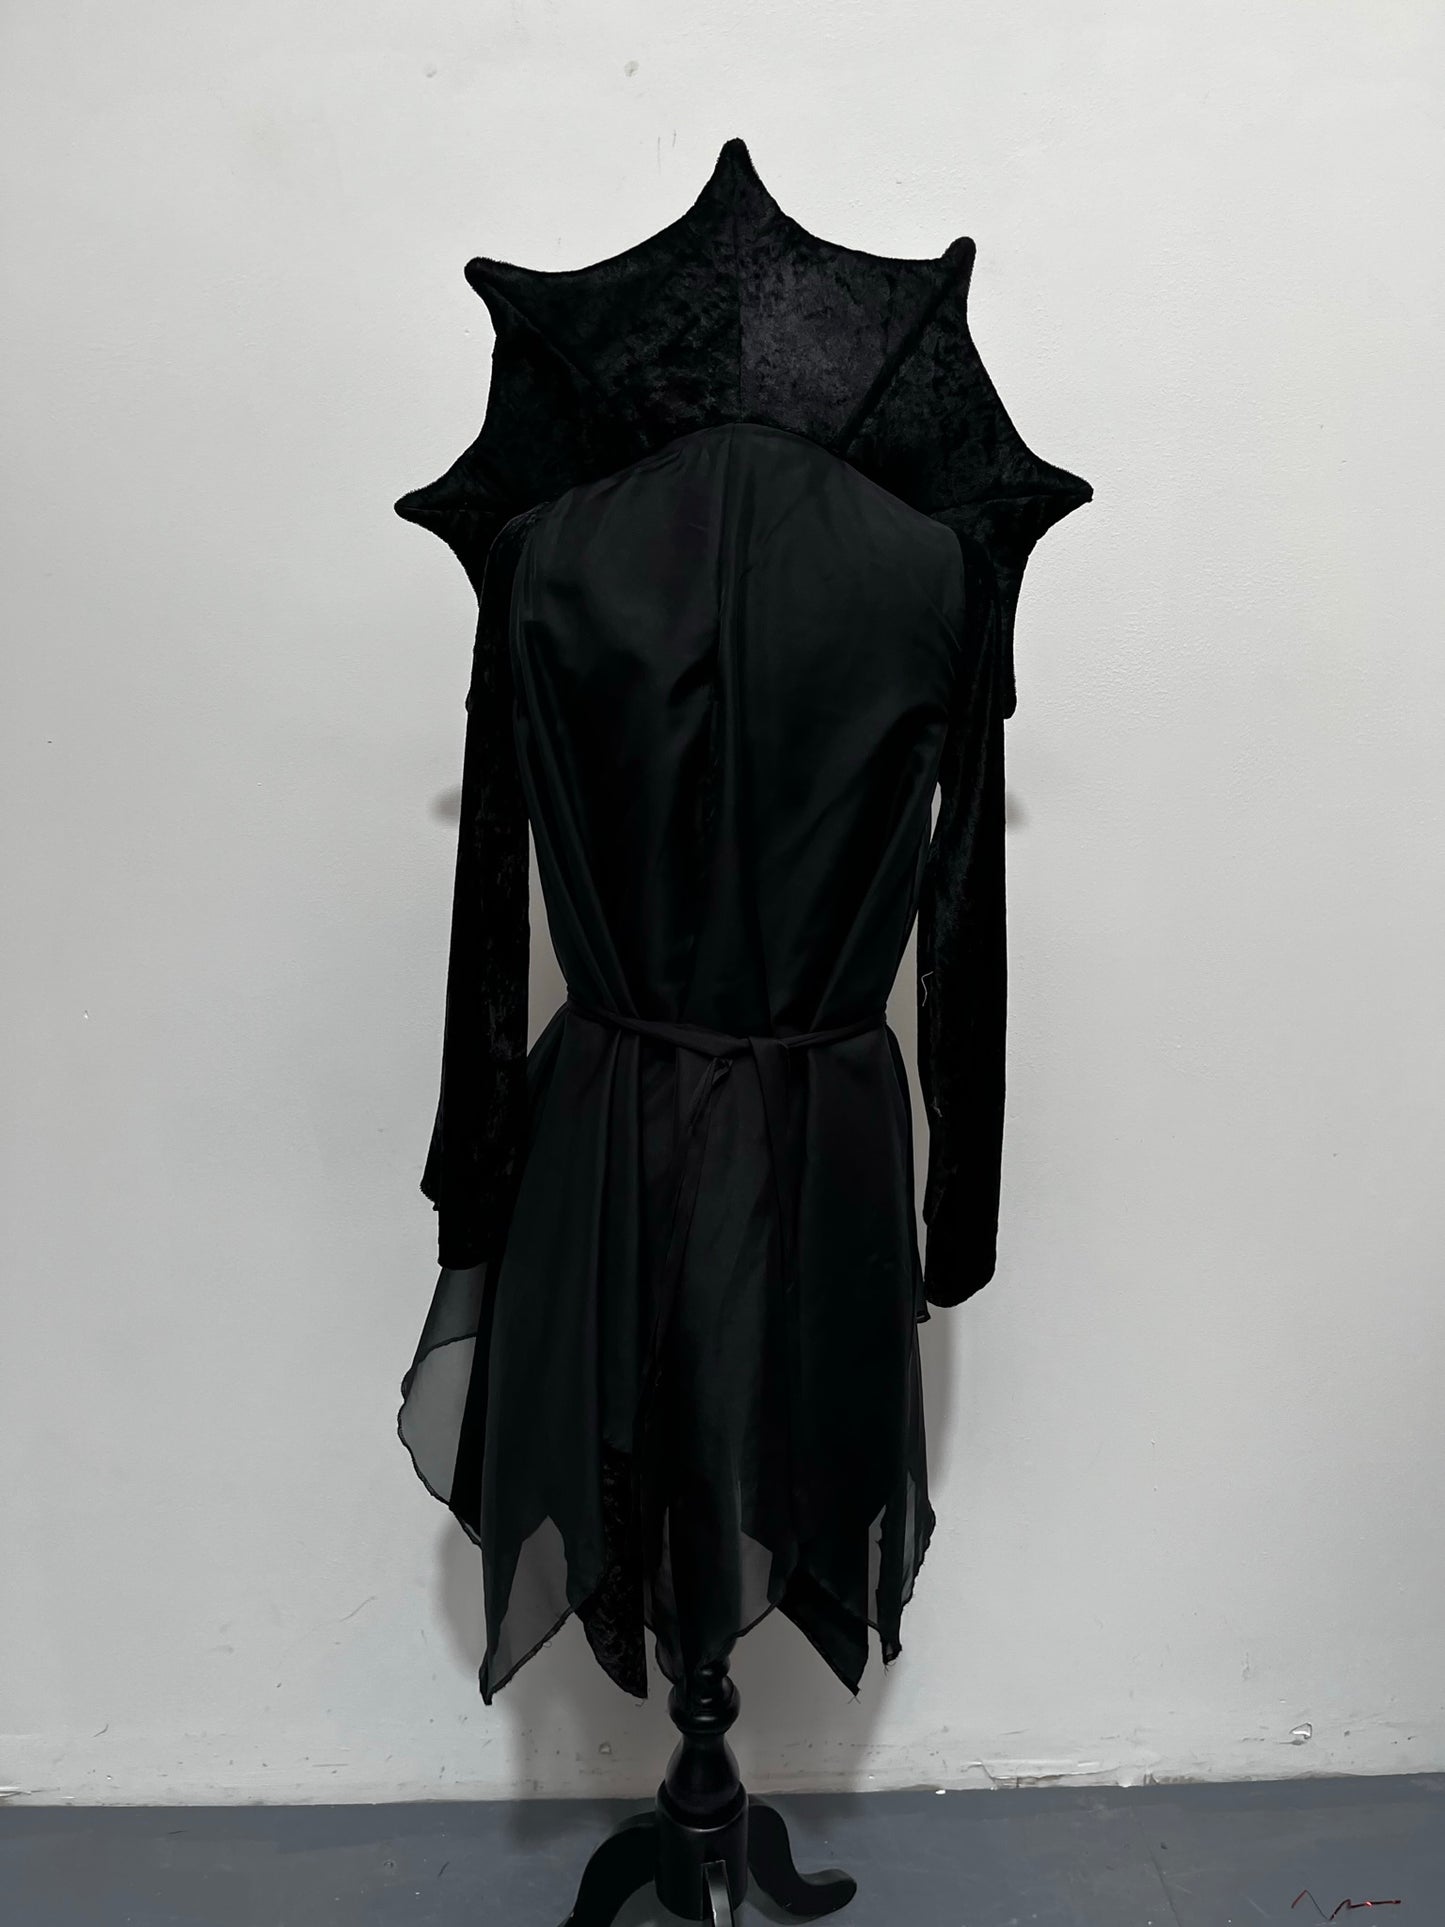 Halloween Wicked Witch Wizard Black Dress Size M - Ex Hire Fancy Dress Costume